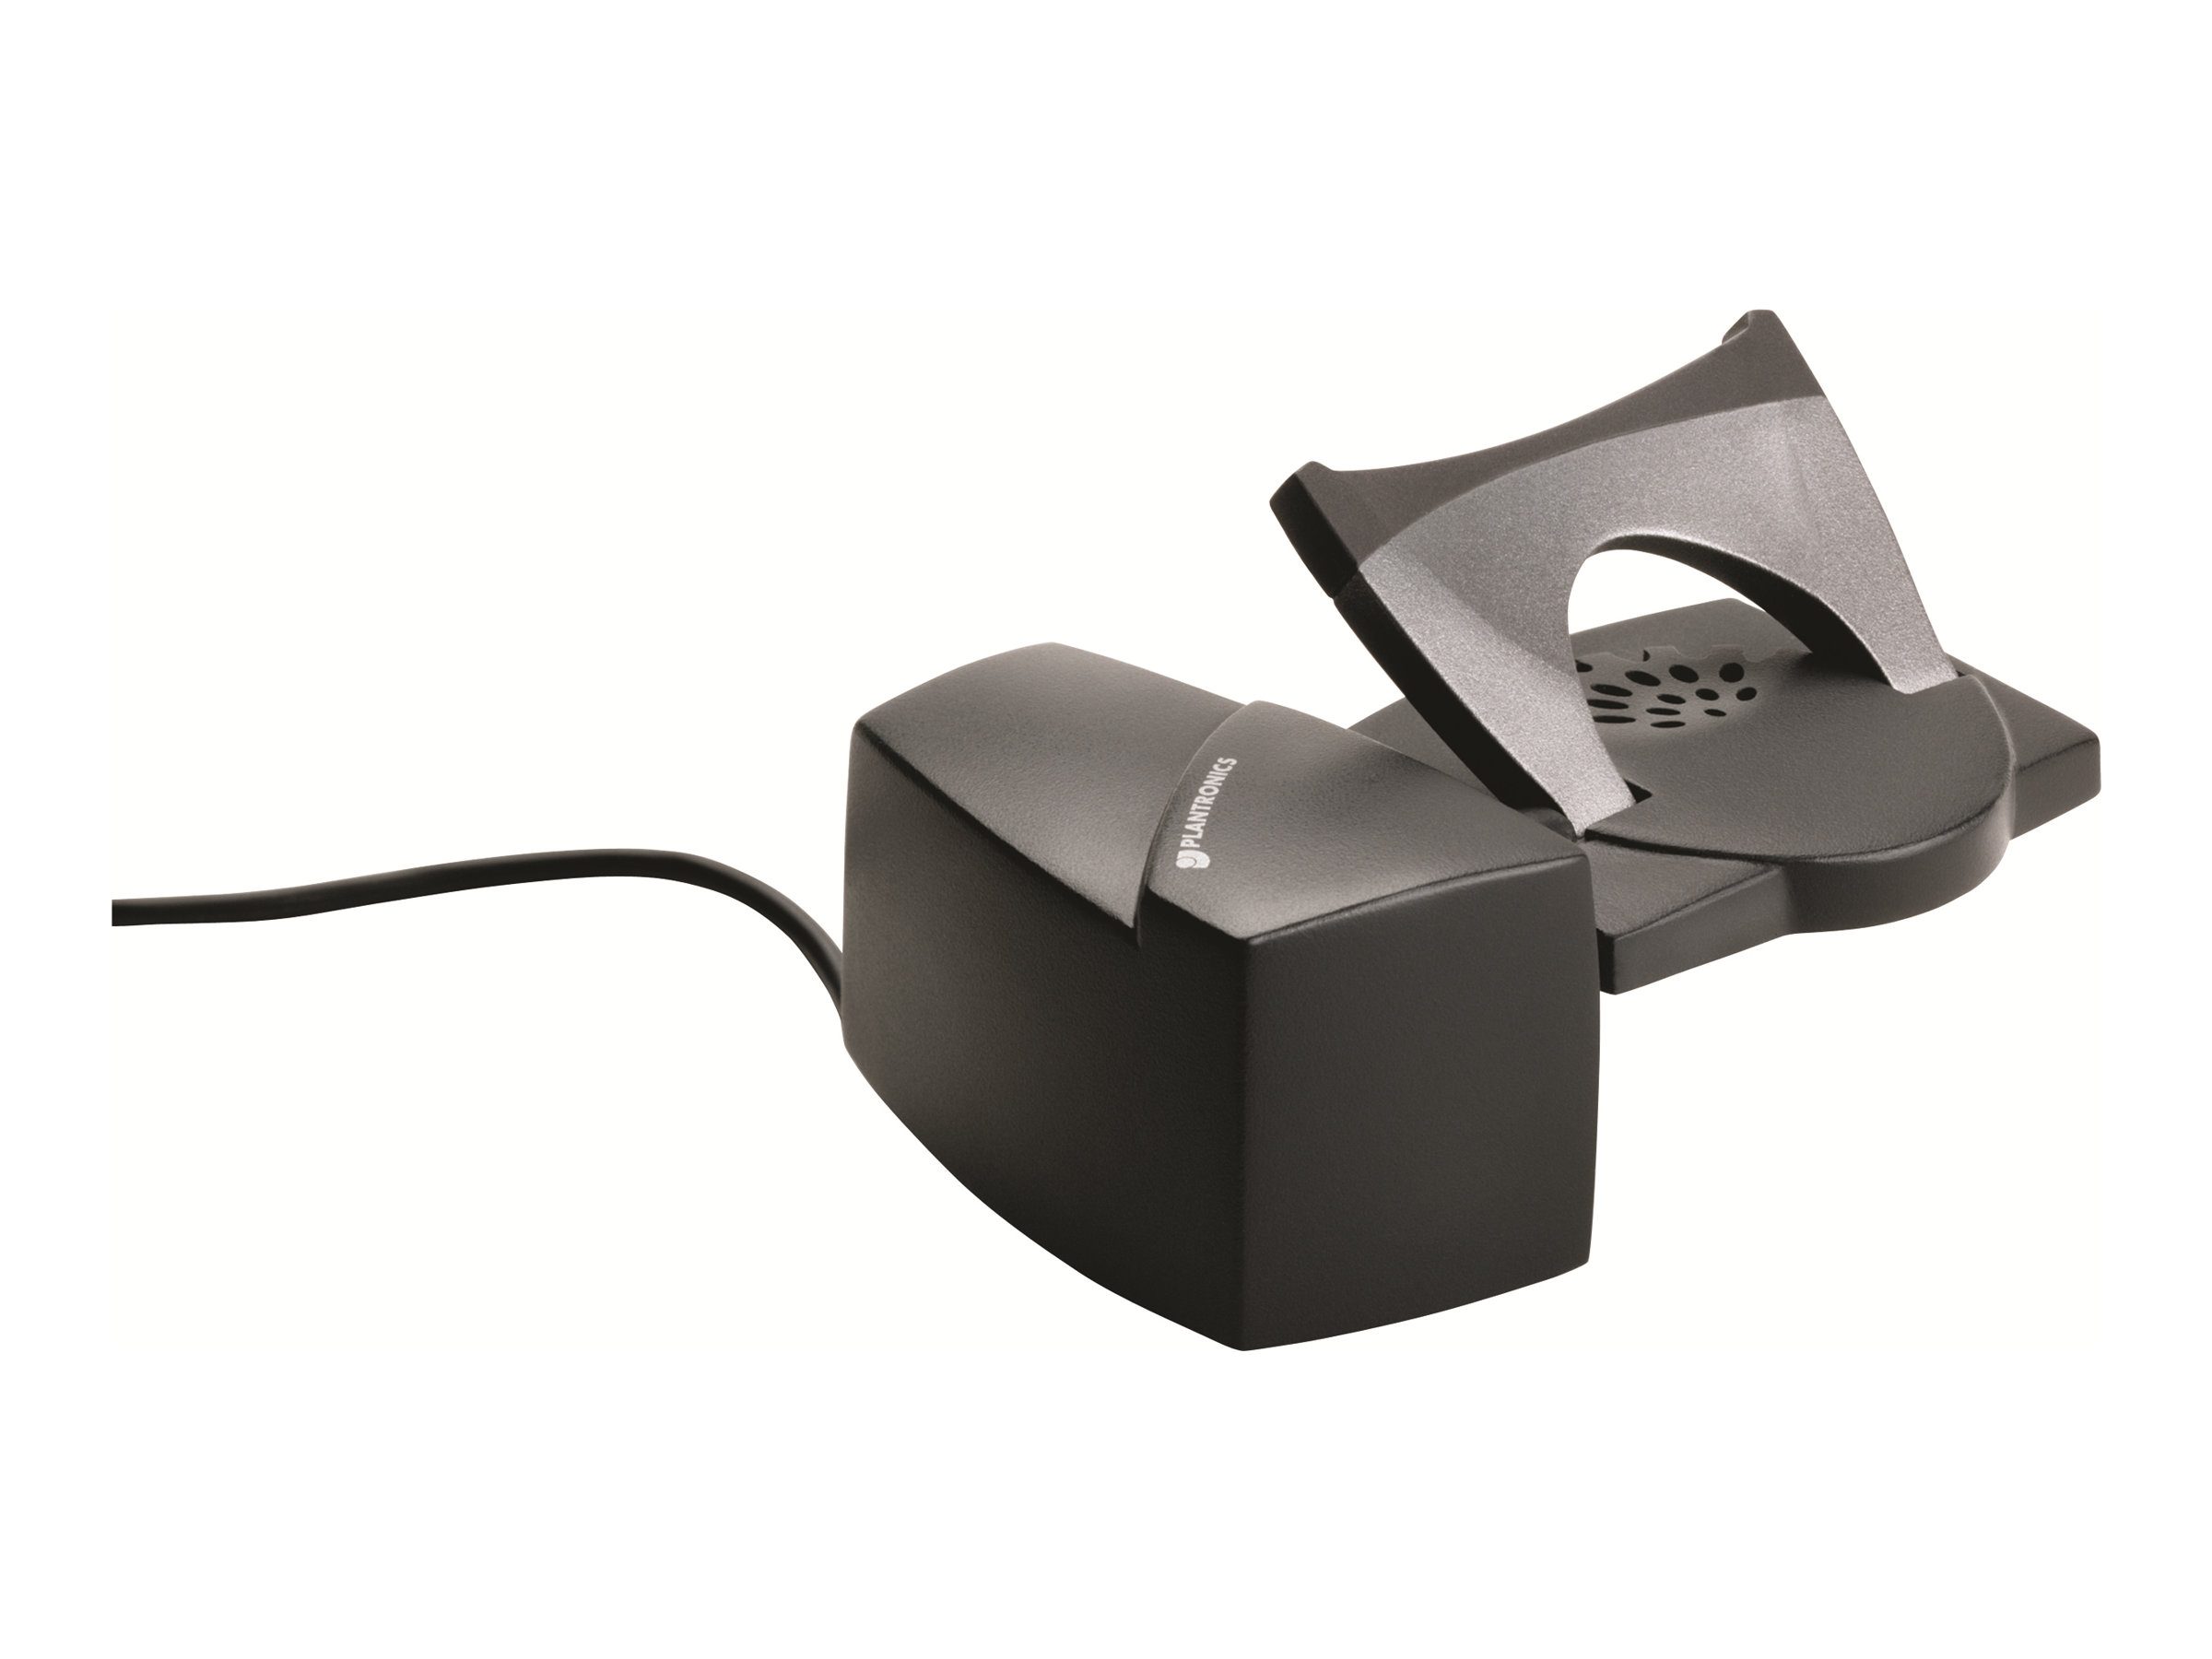 Poly HL 10 - Telefonhörer-Lifter für drahtloses Headset, Telefon